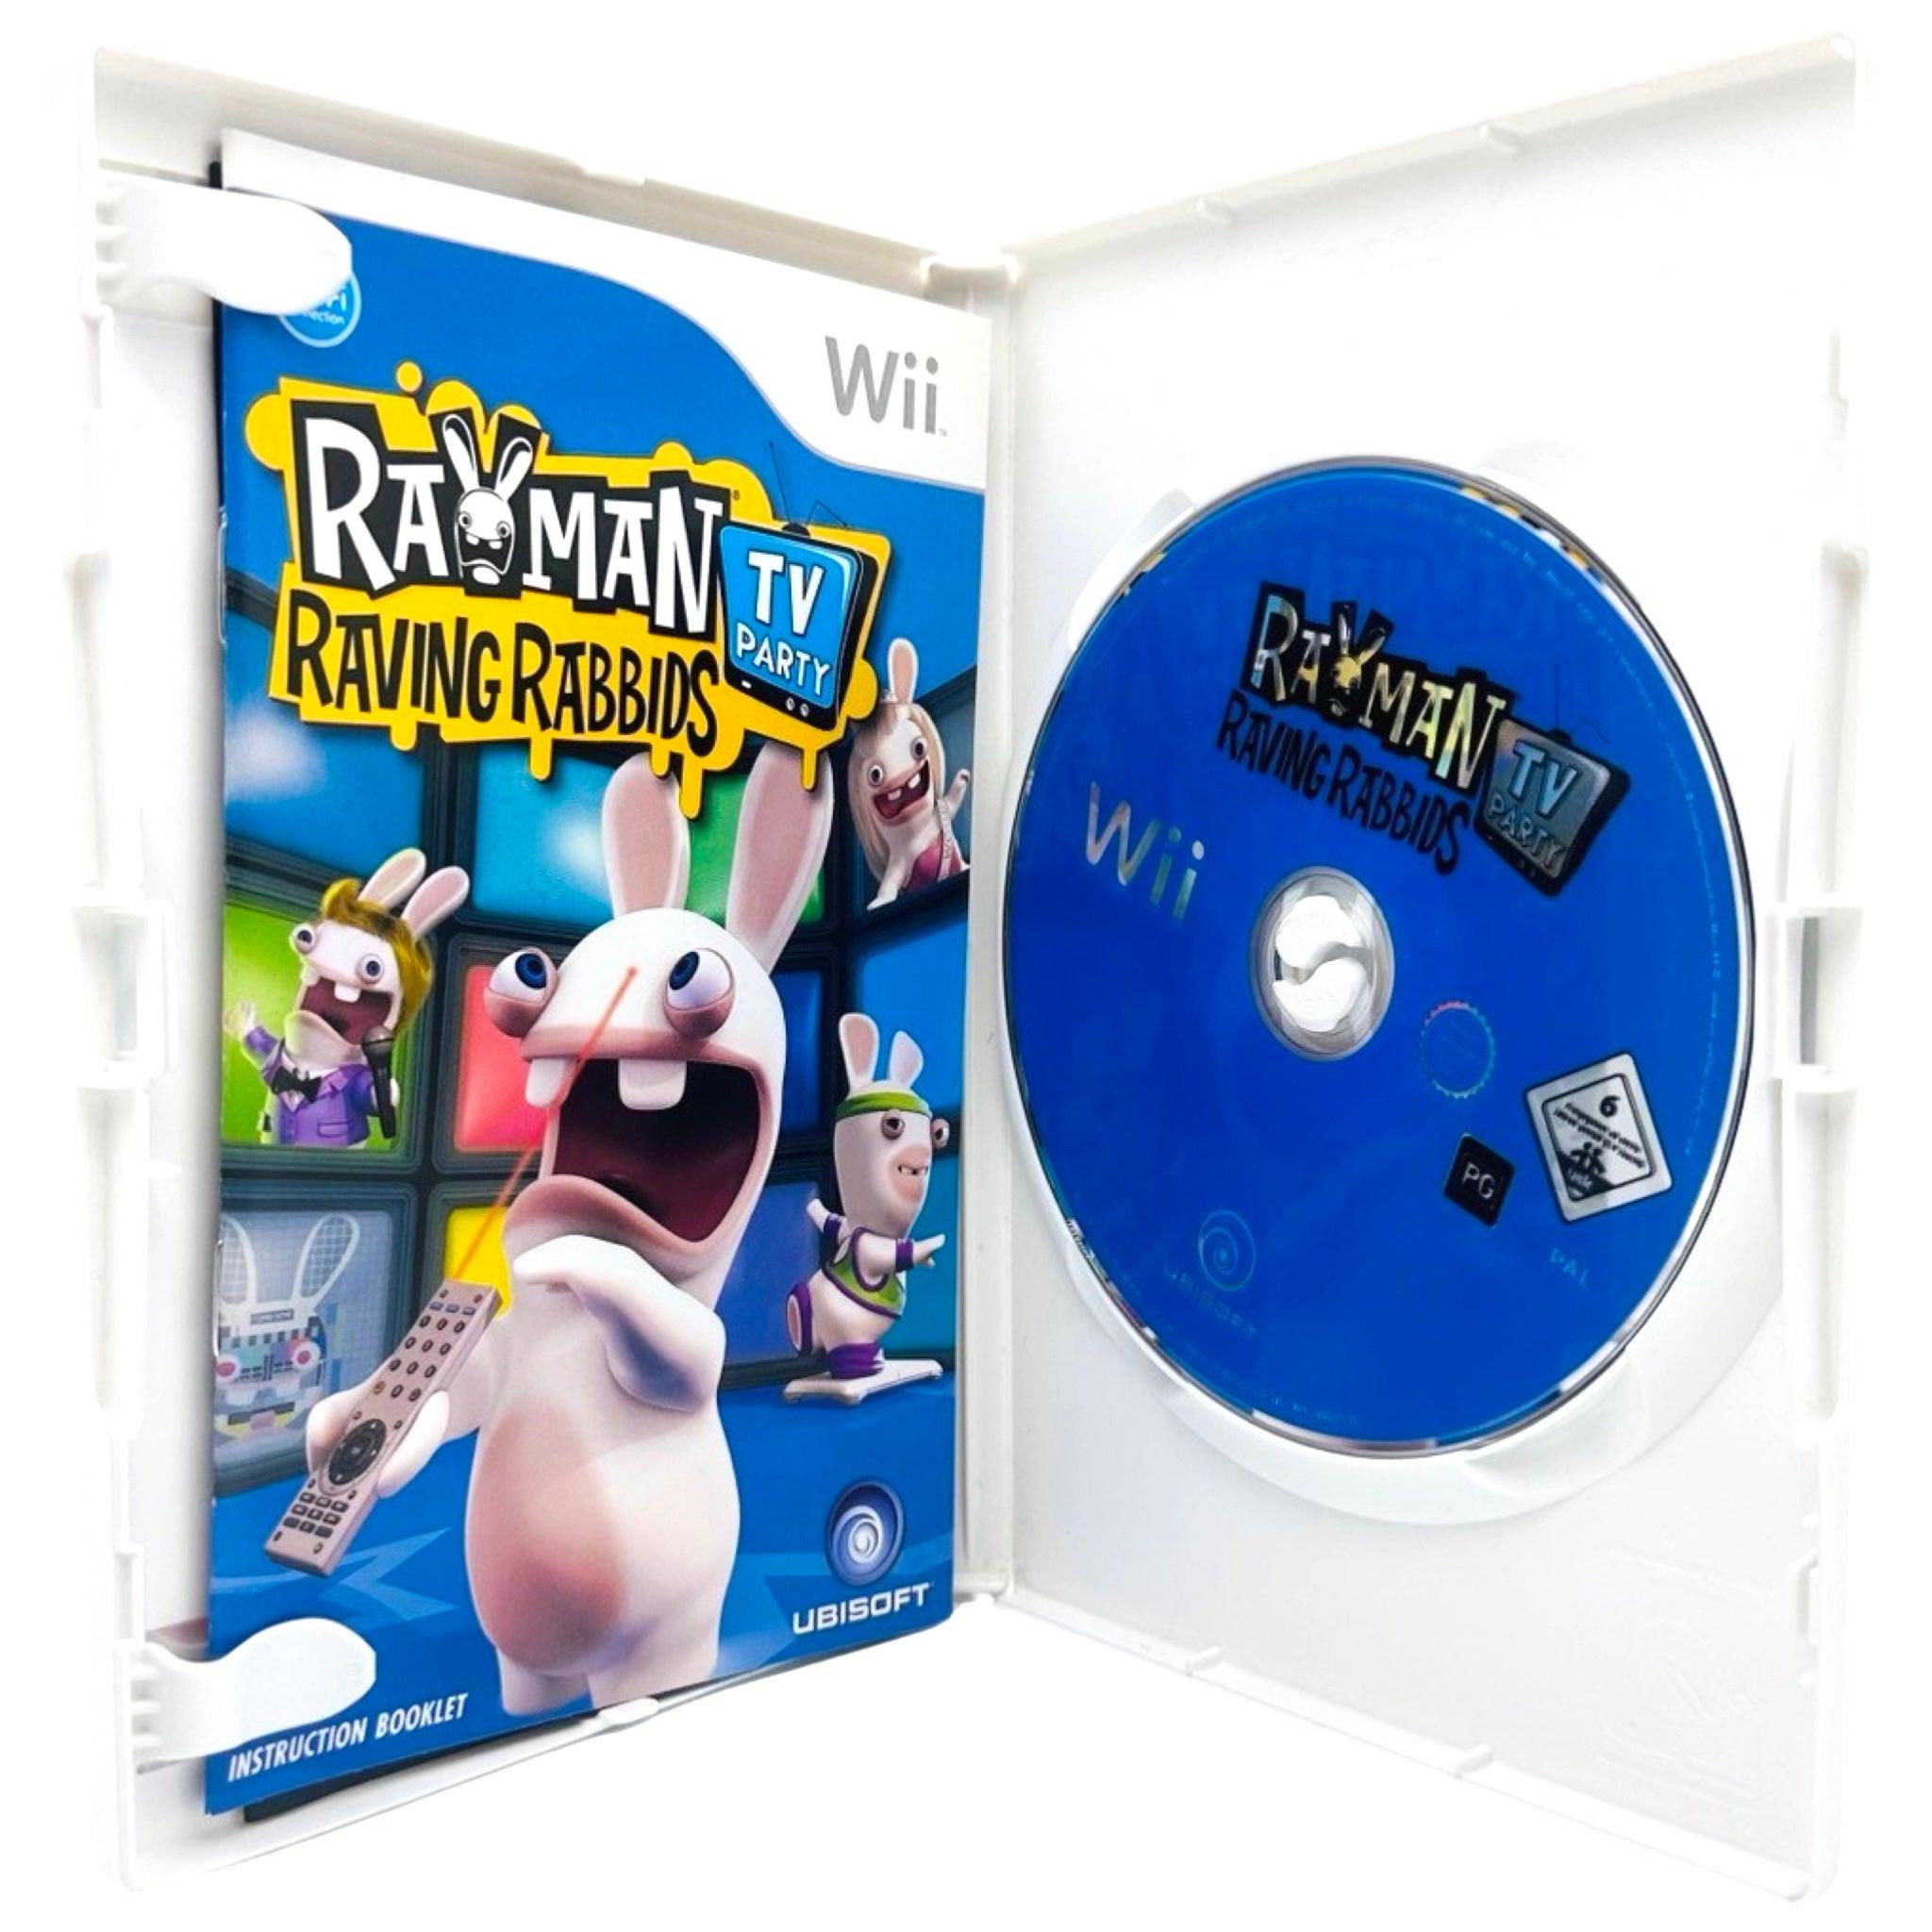 Wii: Rayman Raving Rabbids TV Party - RetroGaming.no